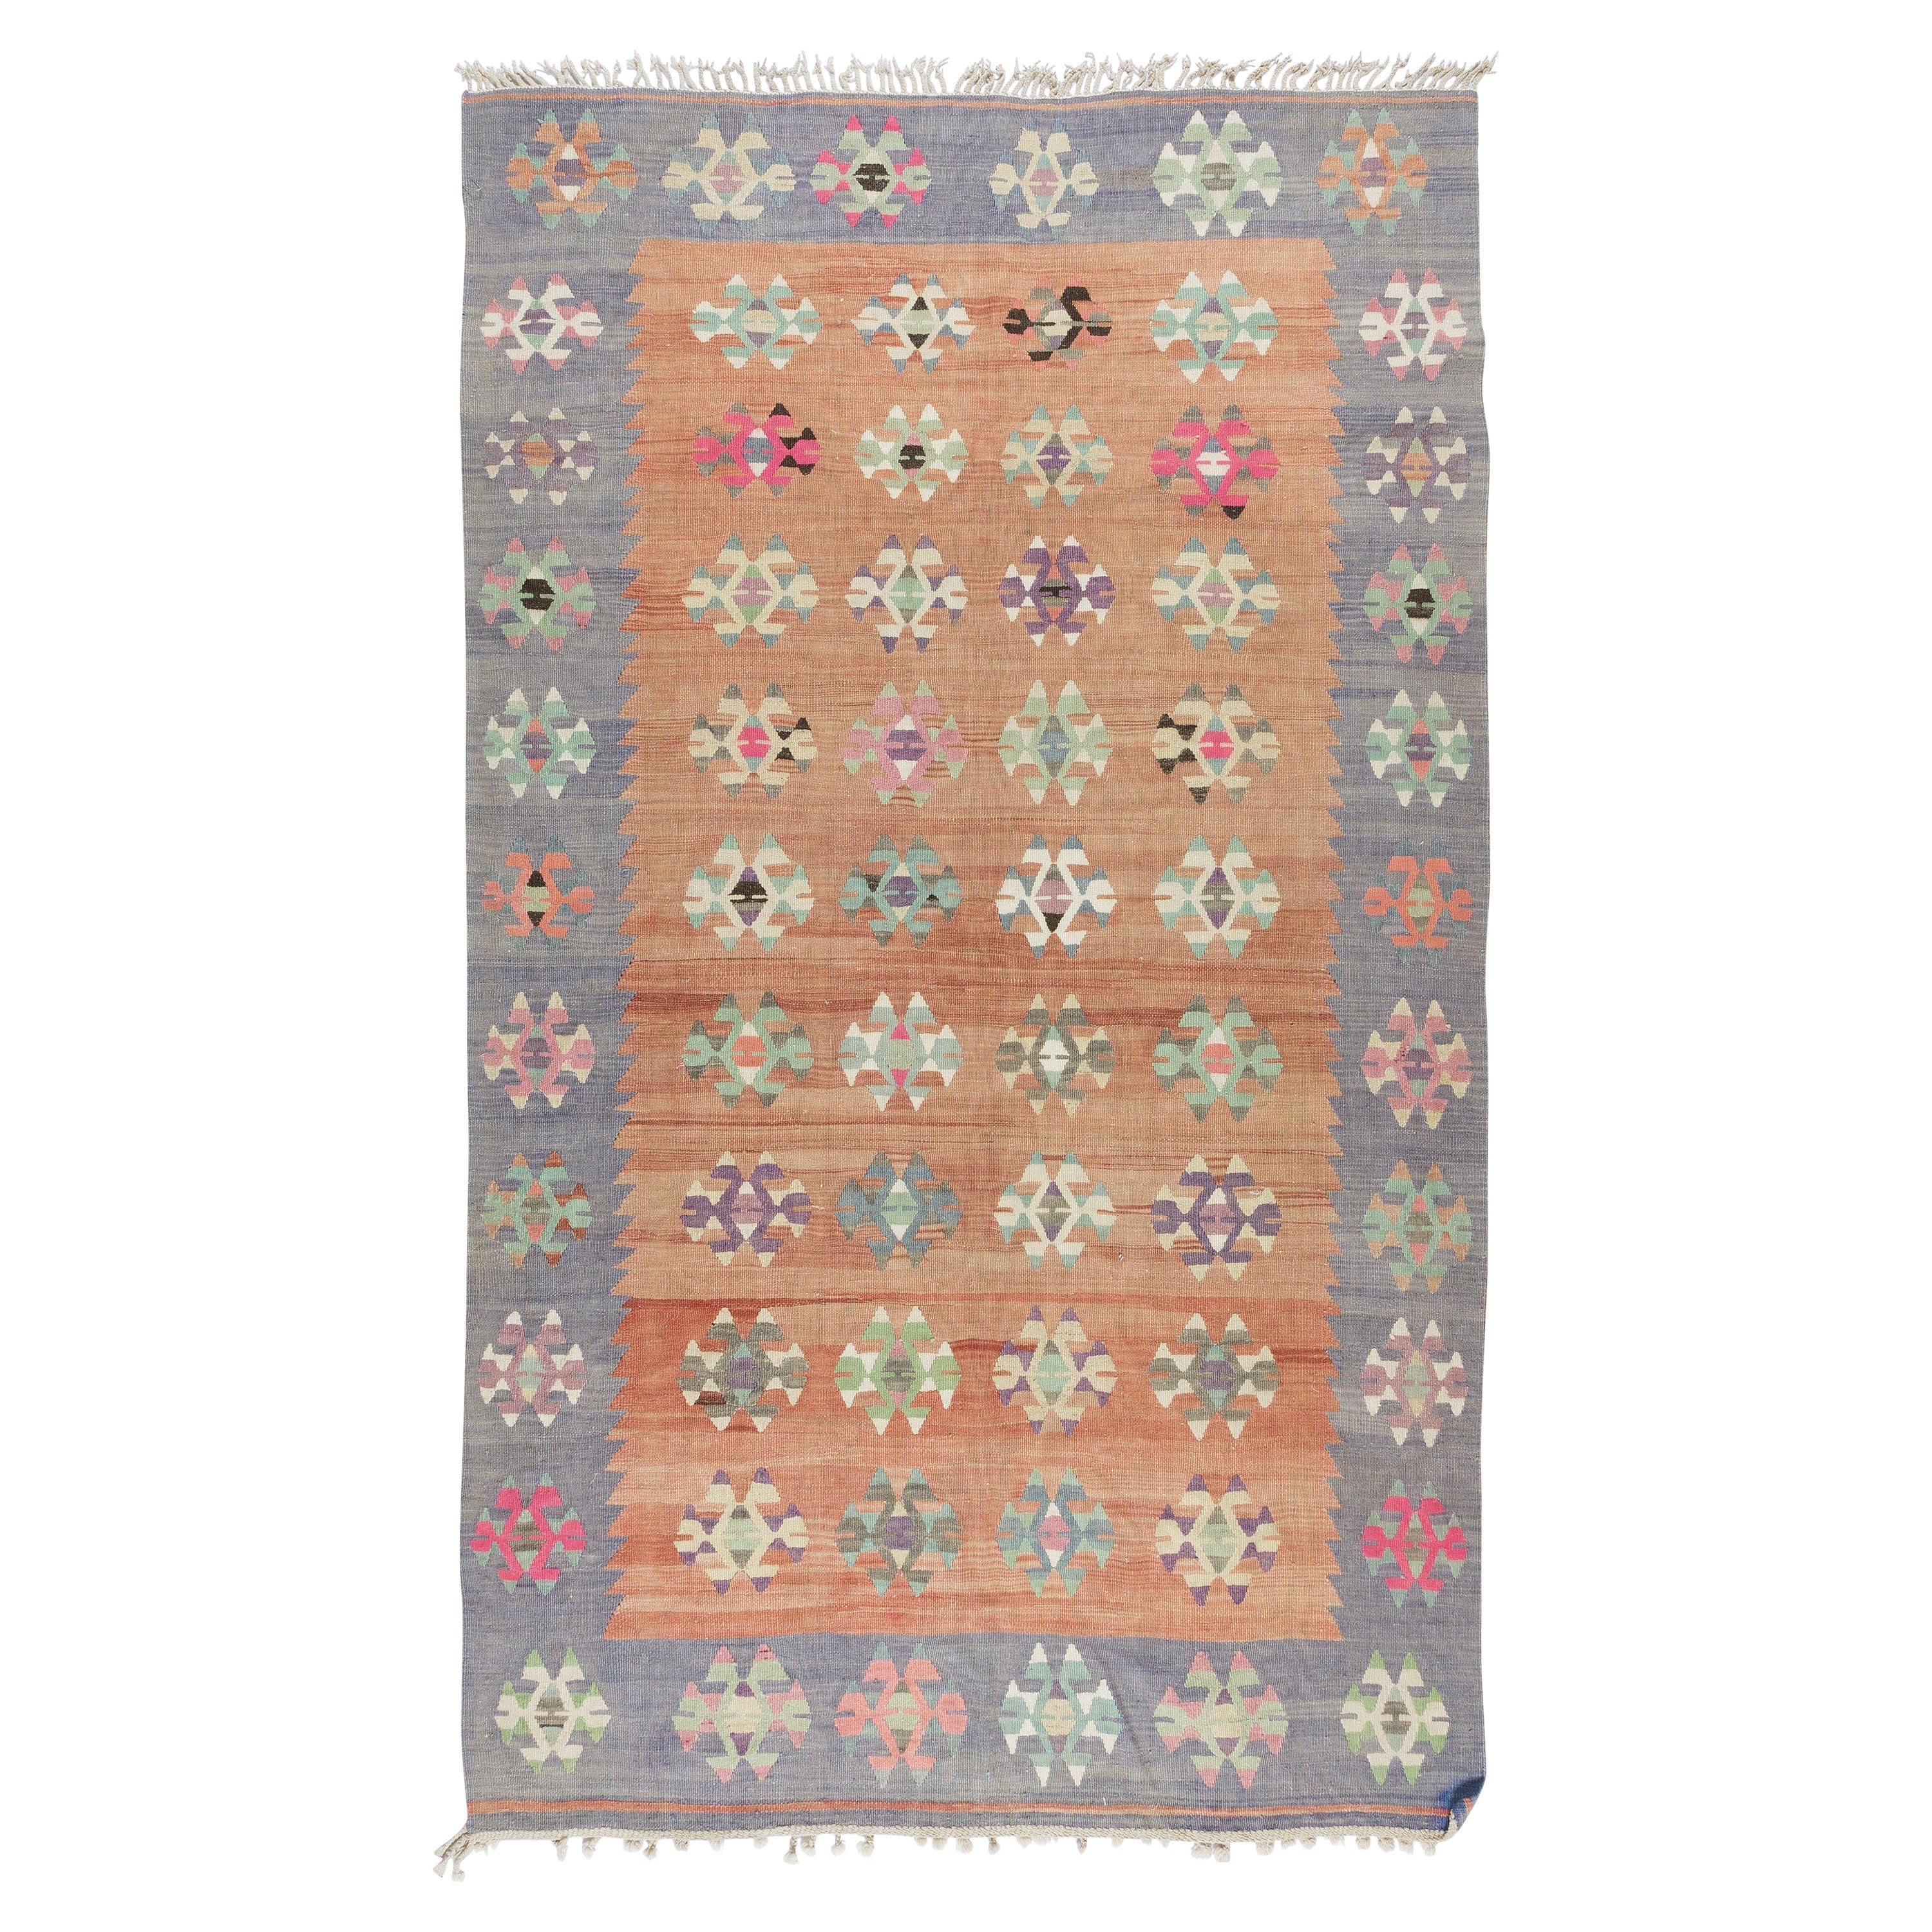 5.5x10.8 Ft Handmade Vintage Turkish Colorful Kilim, Flat-Weave Floor Covering